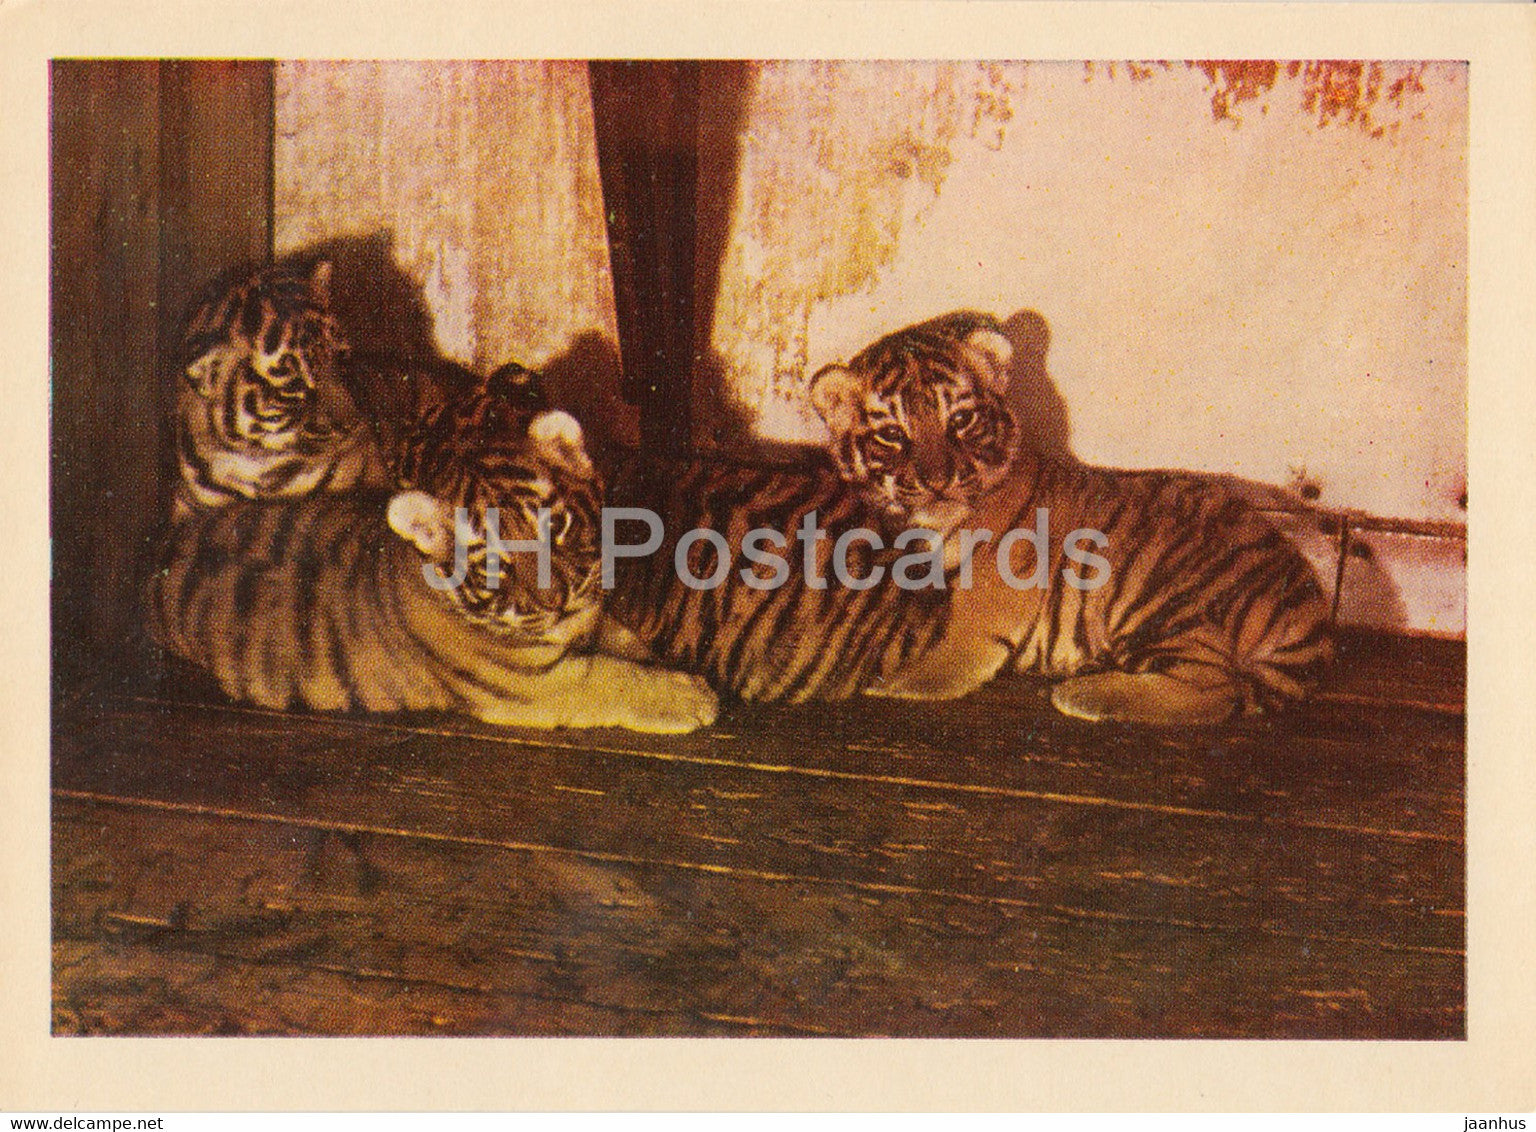 Riga Zoo - Bengal Tiger - Panthera tigris tigris - Latvia USSR - unused - JH Postcards